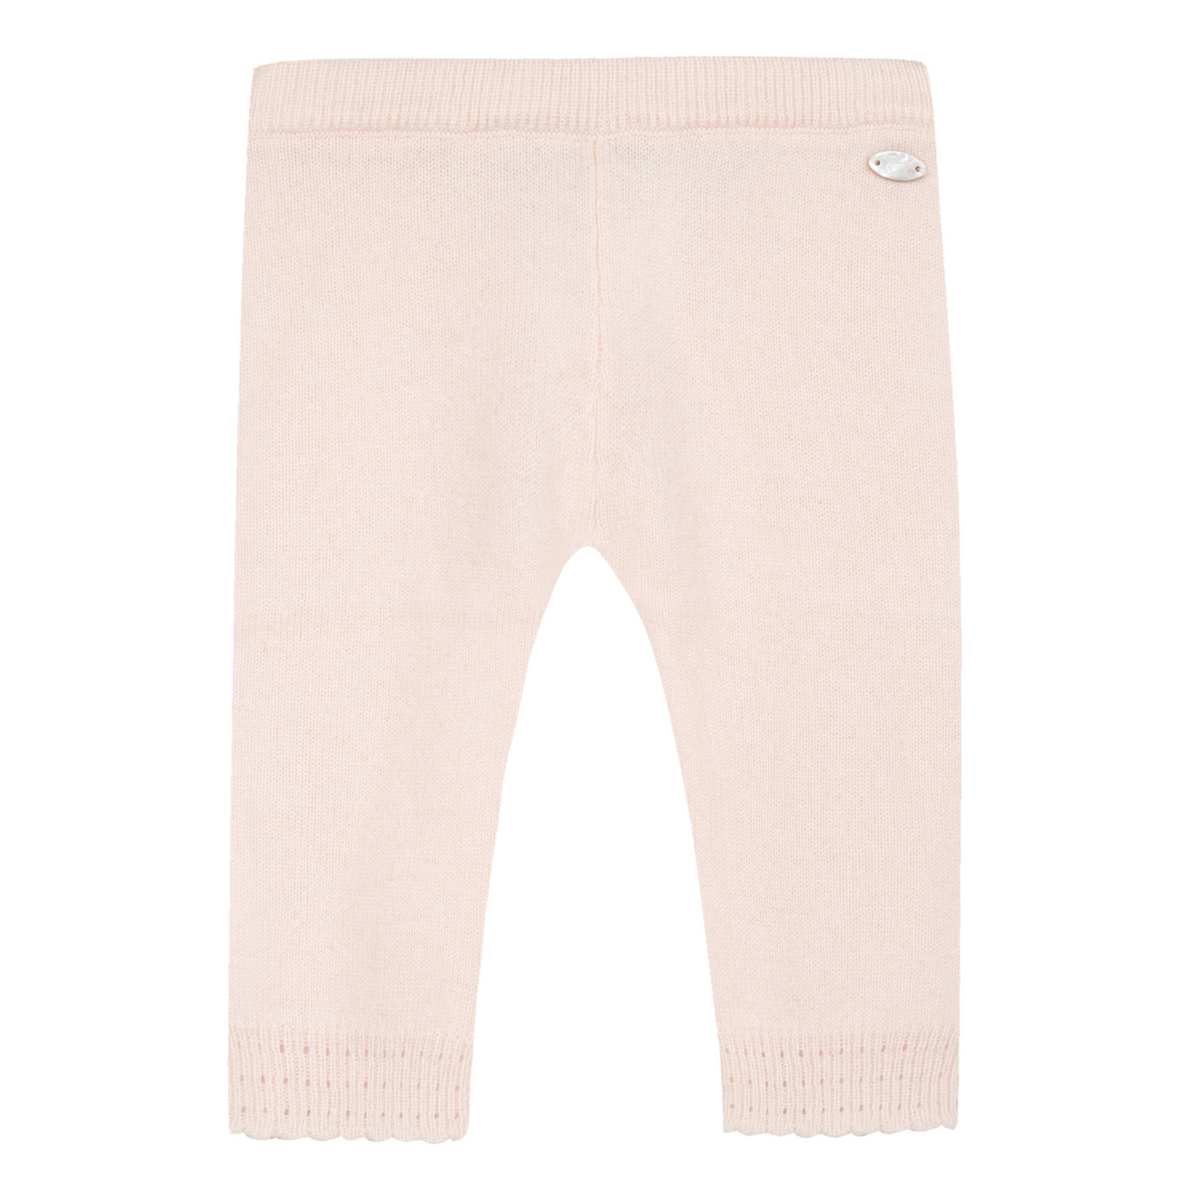 Neon Pink Nylon Leggings – WeStyle365